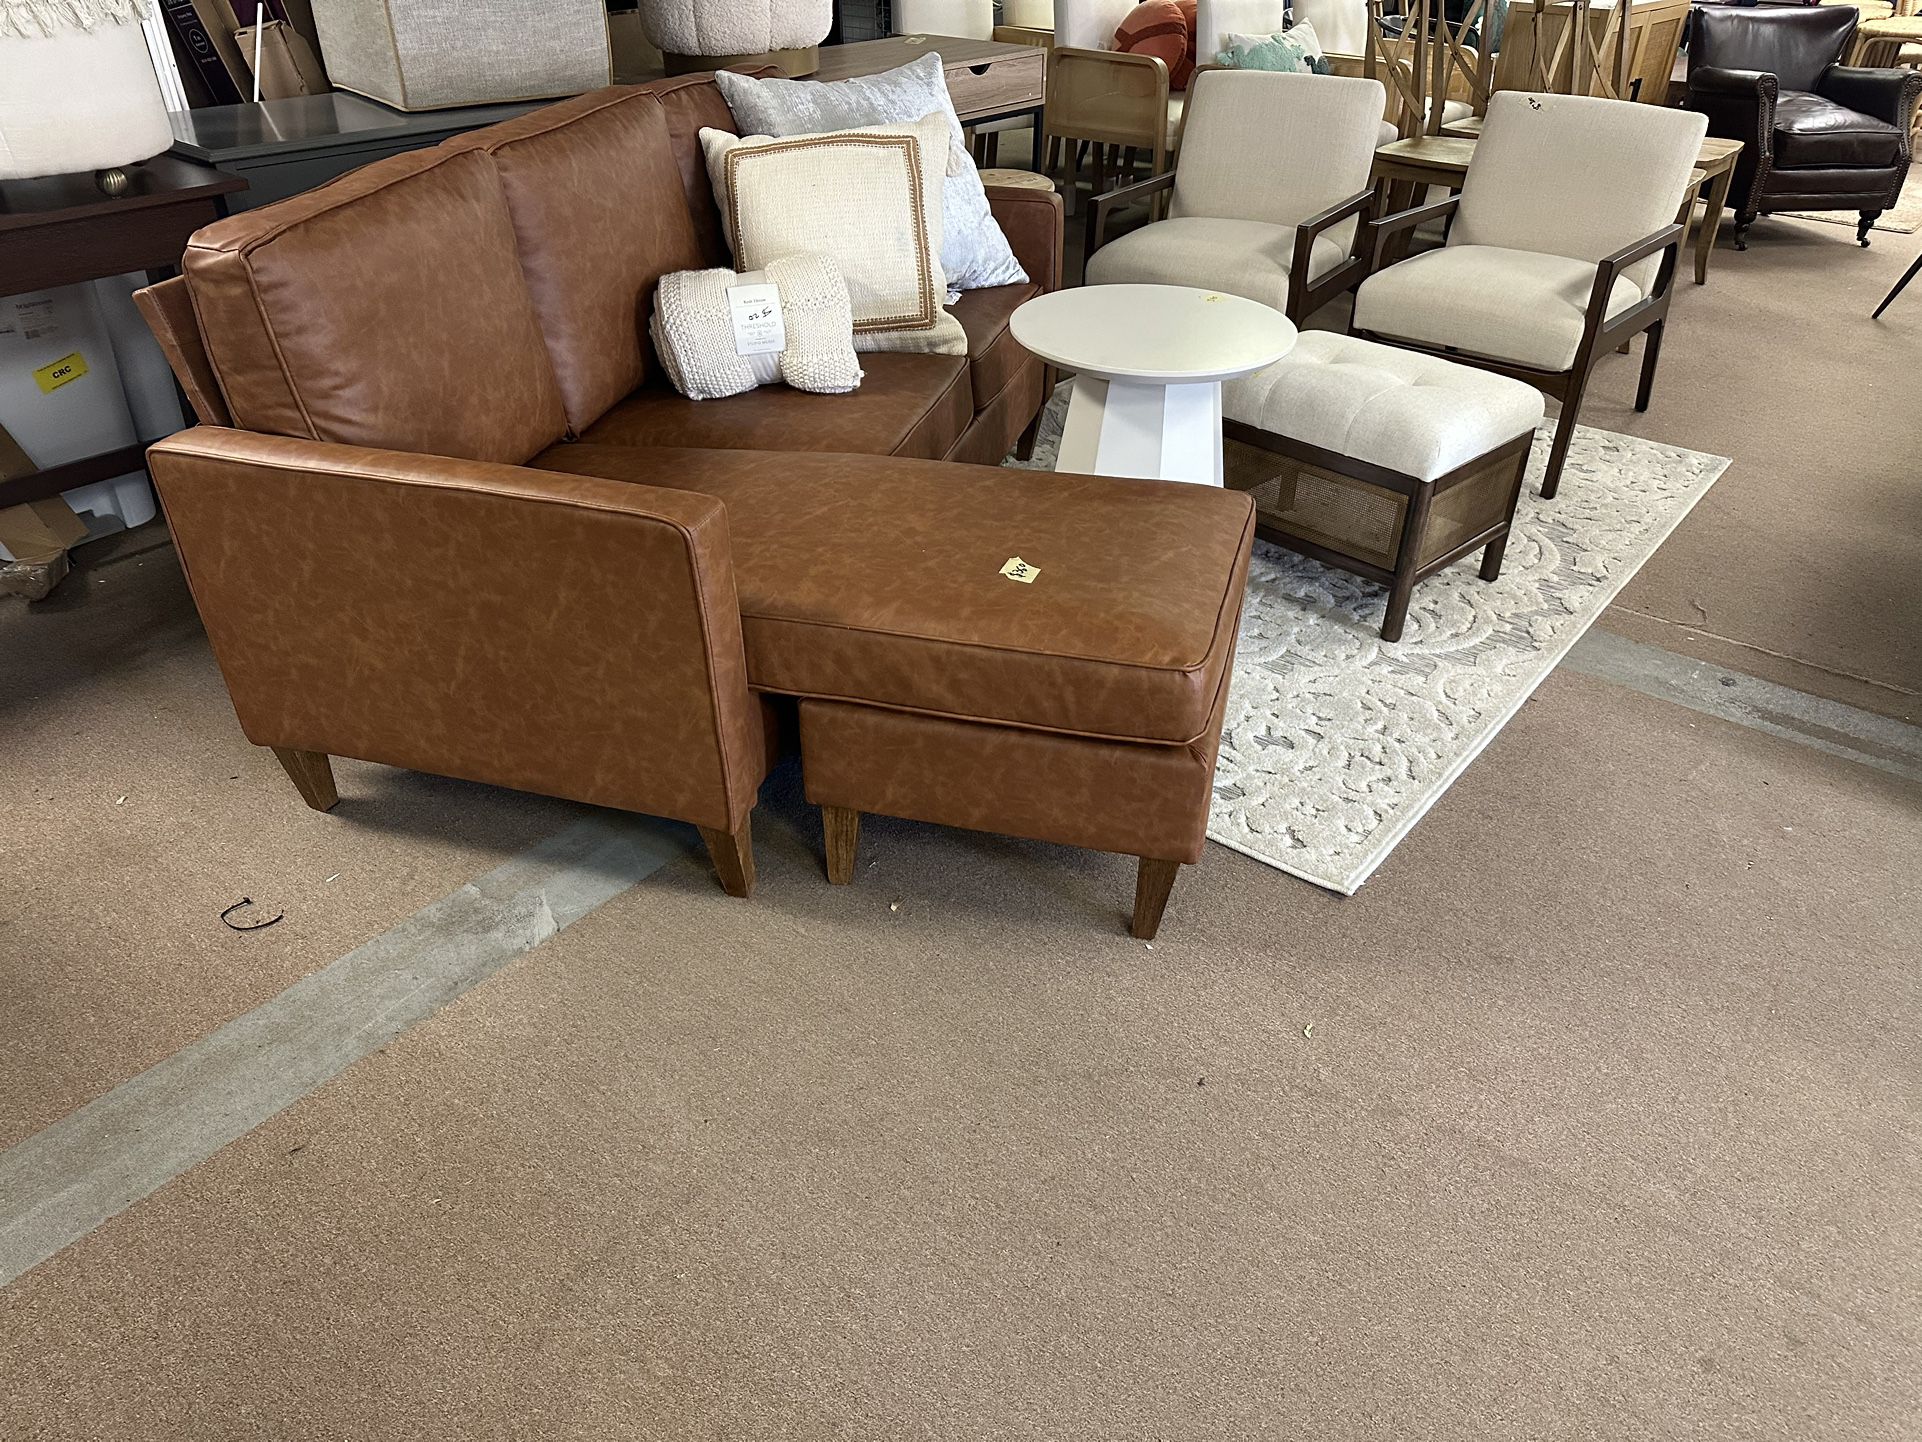 New Furniture $100-$330